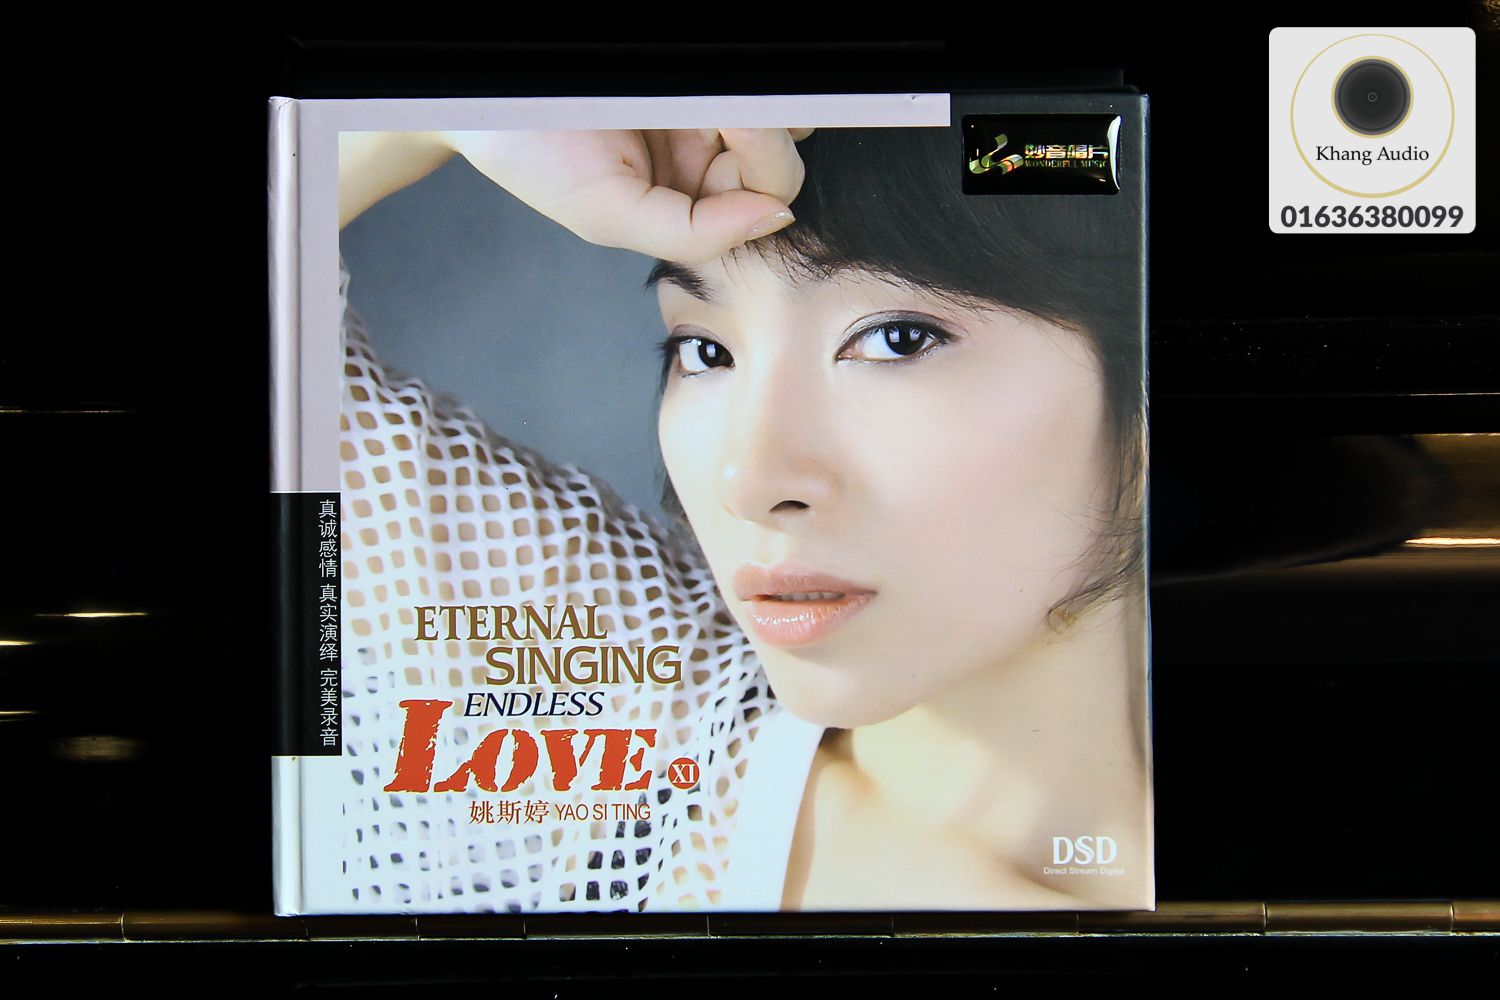 Eternal Singing Endless Love XI - Yao Si Ting Khang Audio 0336380099